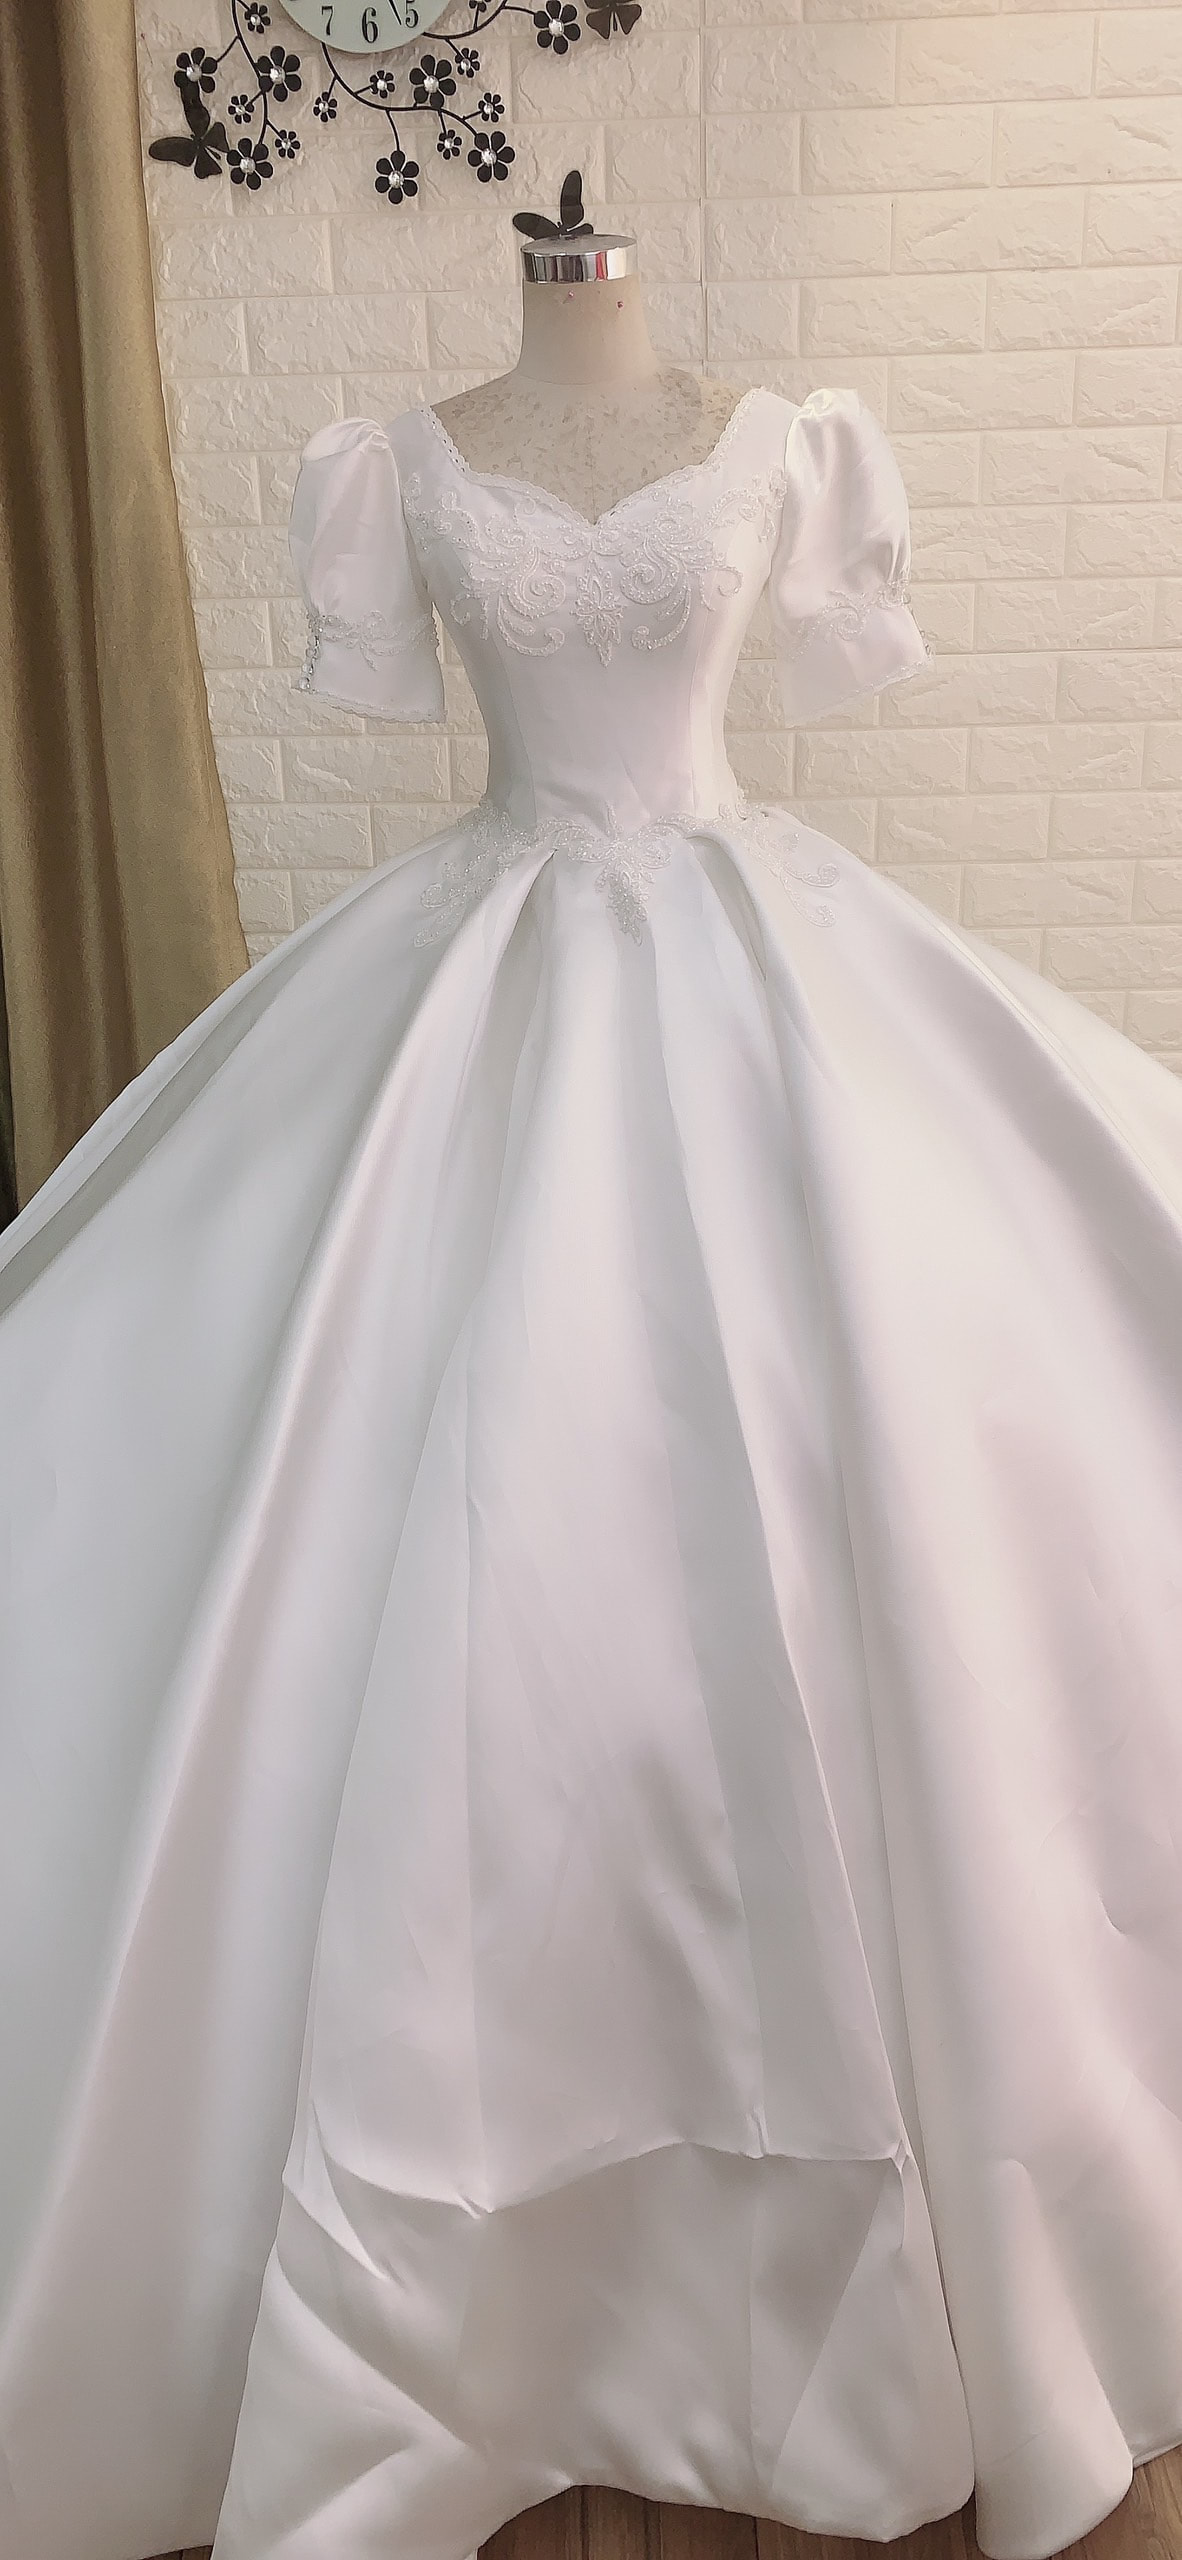 Minimalist elegant white satin ball gown wedding dress hanging sleeves or short sleeves 